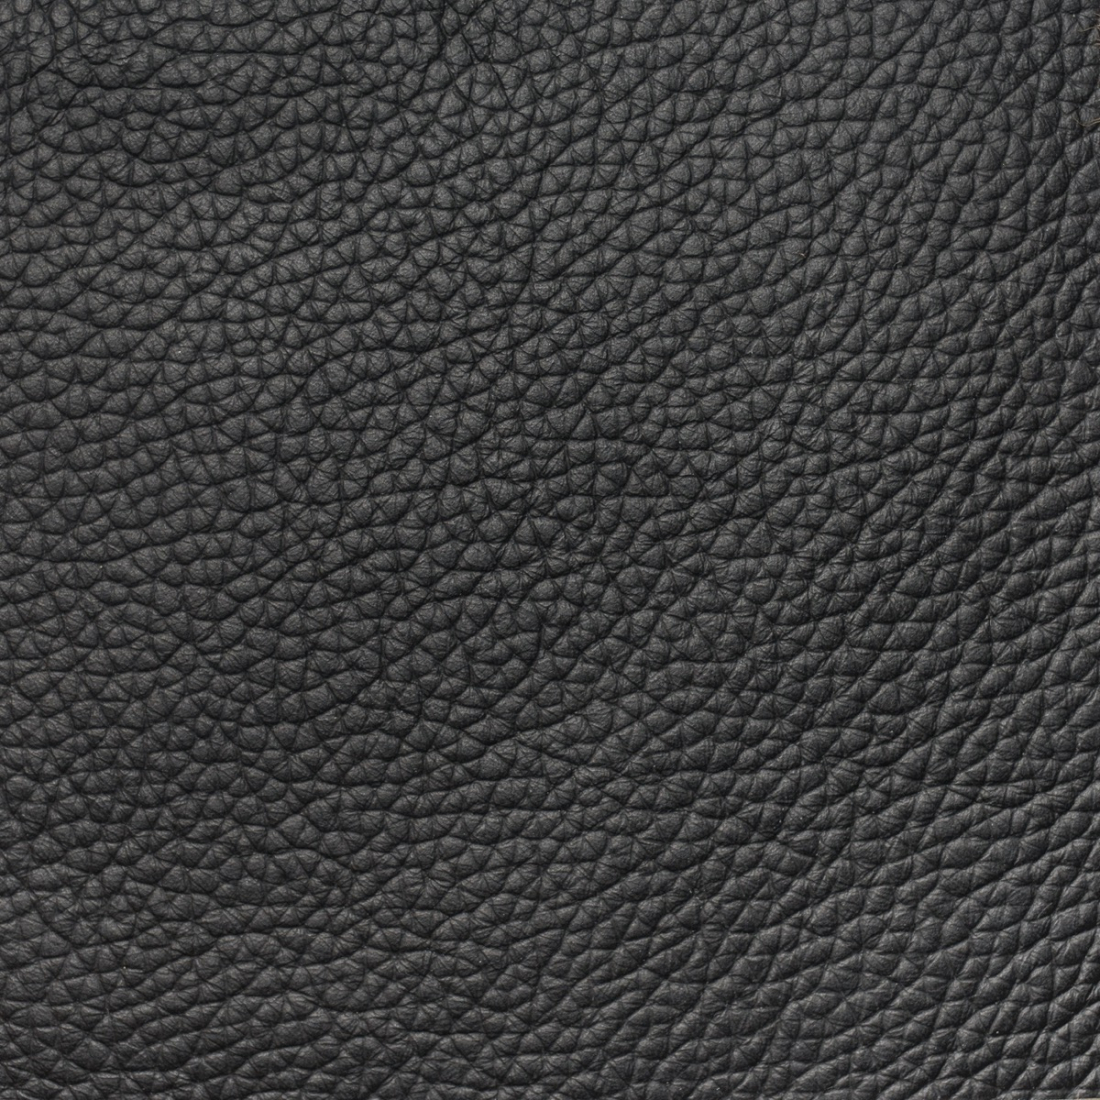 Top Grain Leather